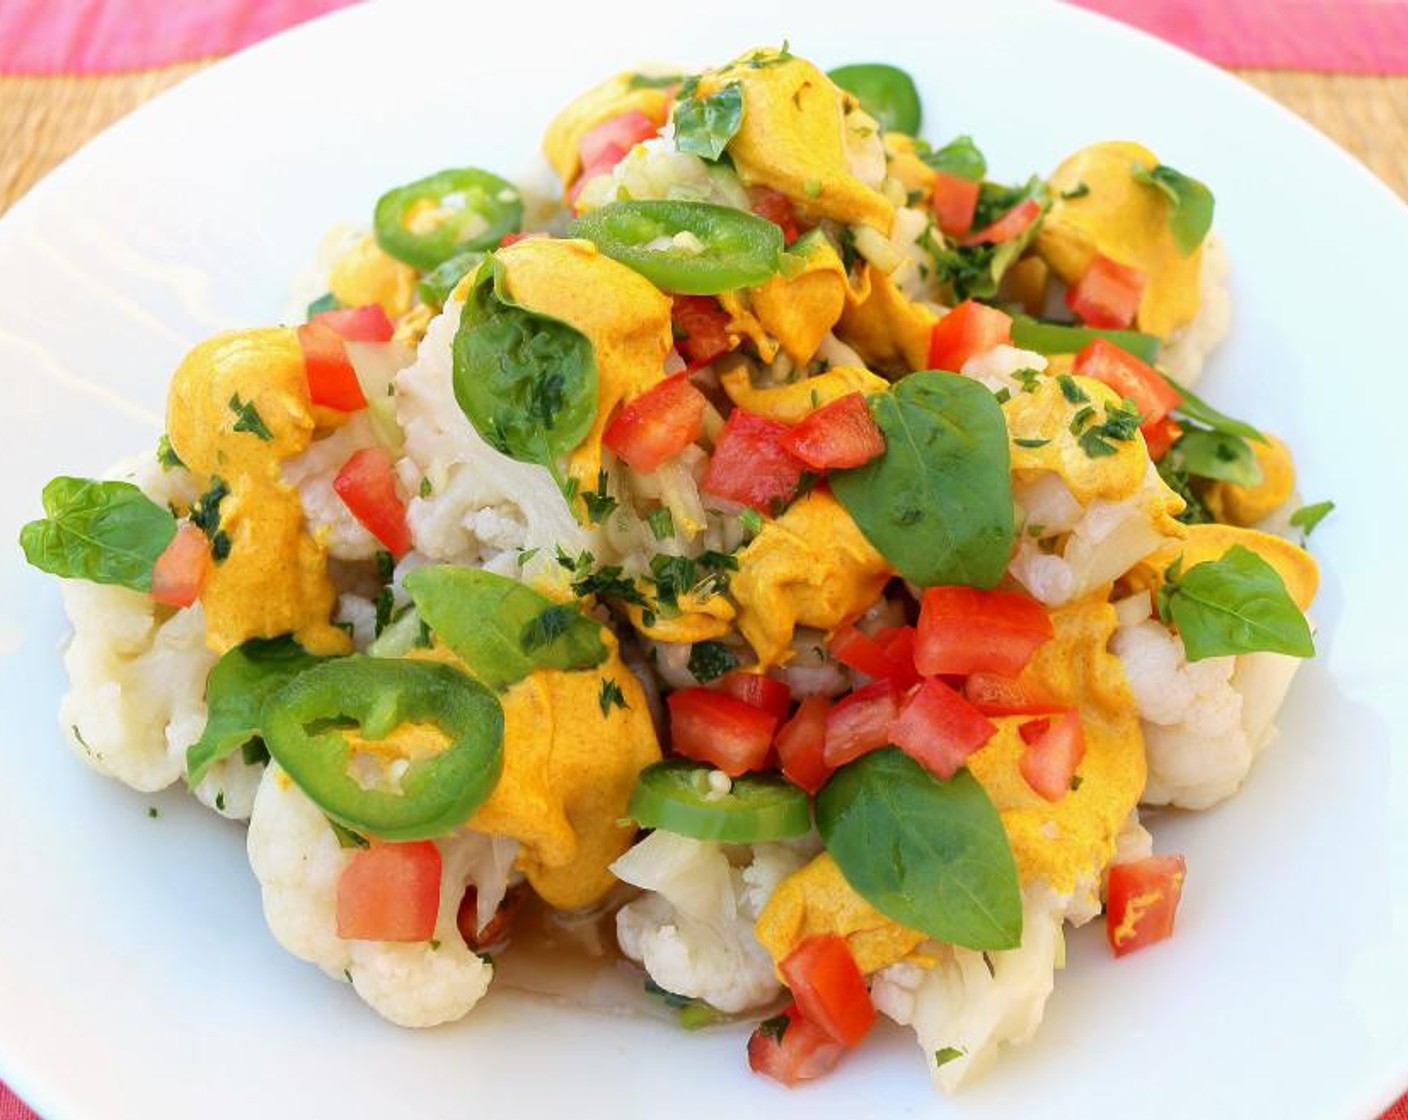 Cauliflower Salad “Madras”